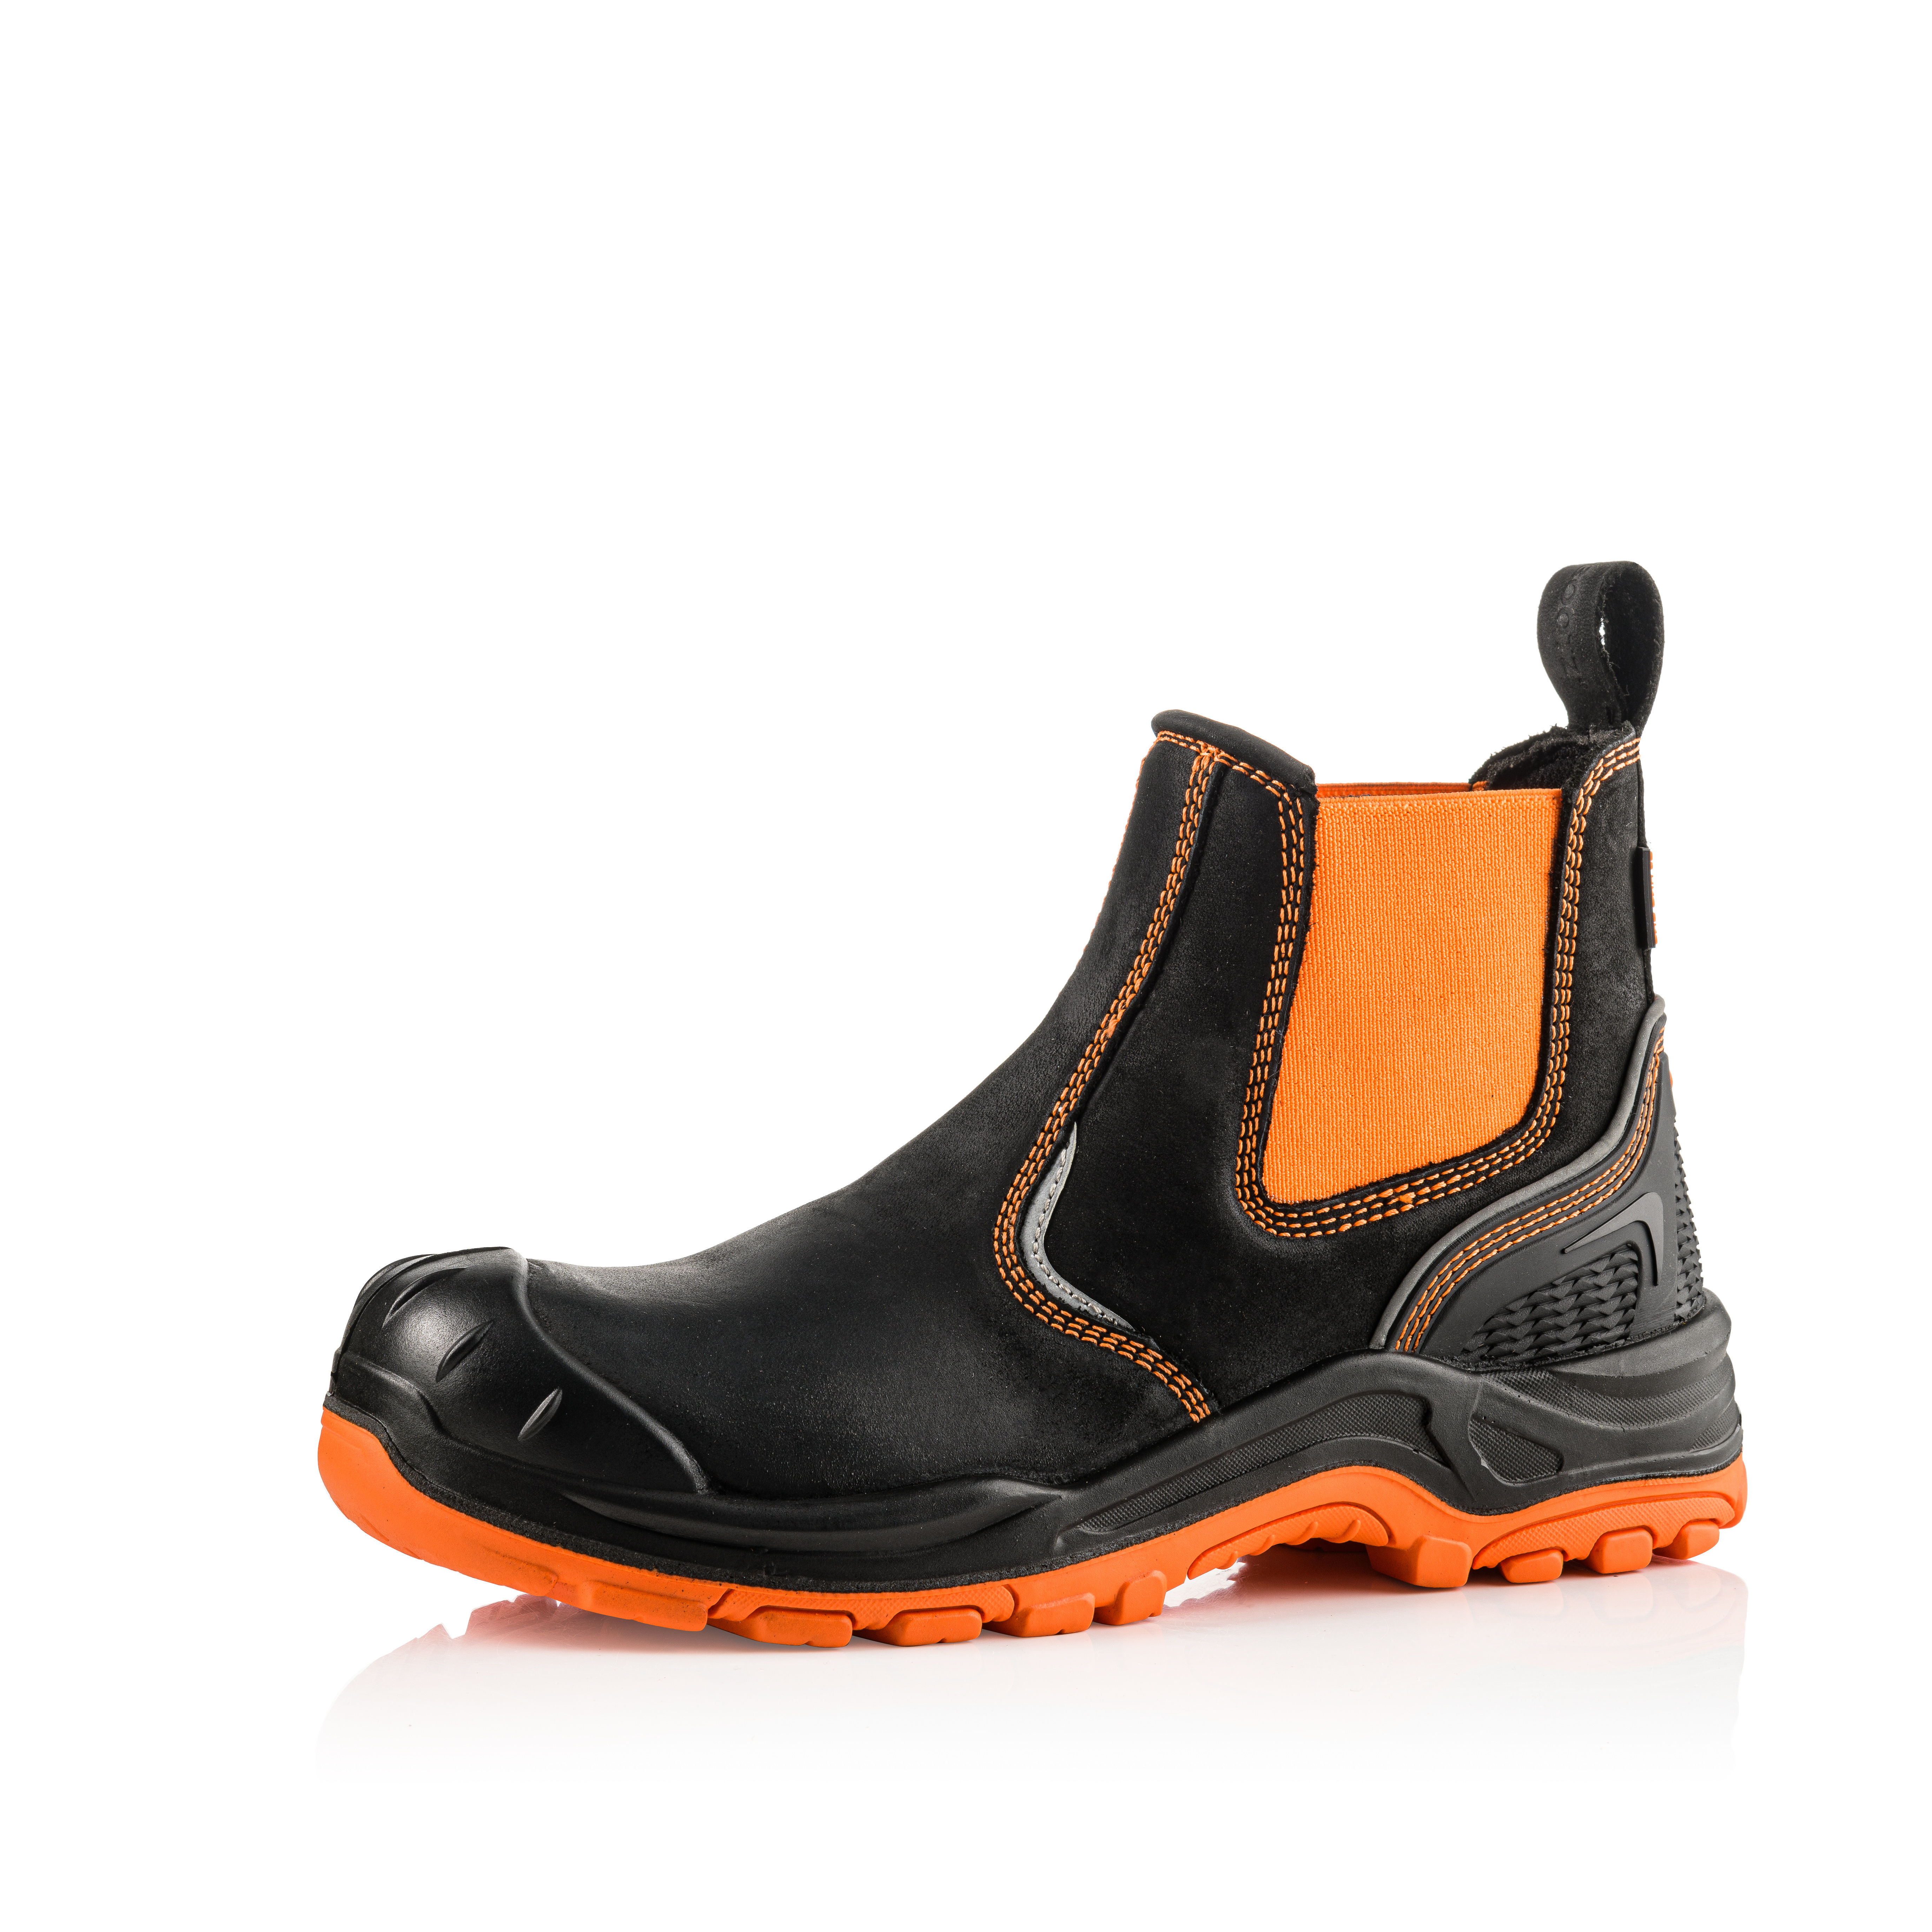 Buckler Buckz Viz Hi-Vis Waterproof Safety Dealer Boots Black/Orange - BVIZ3ORBK